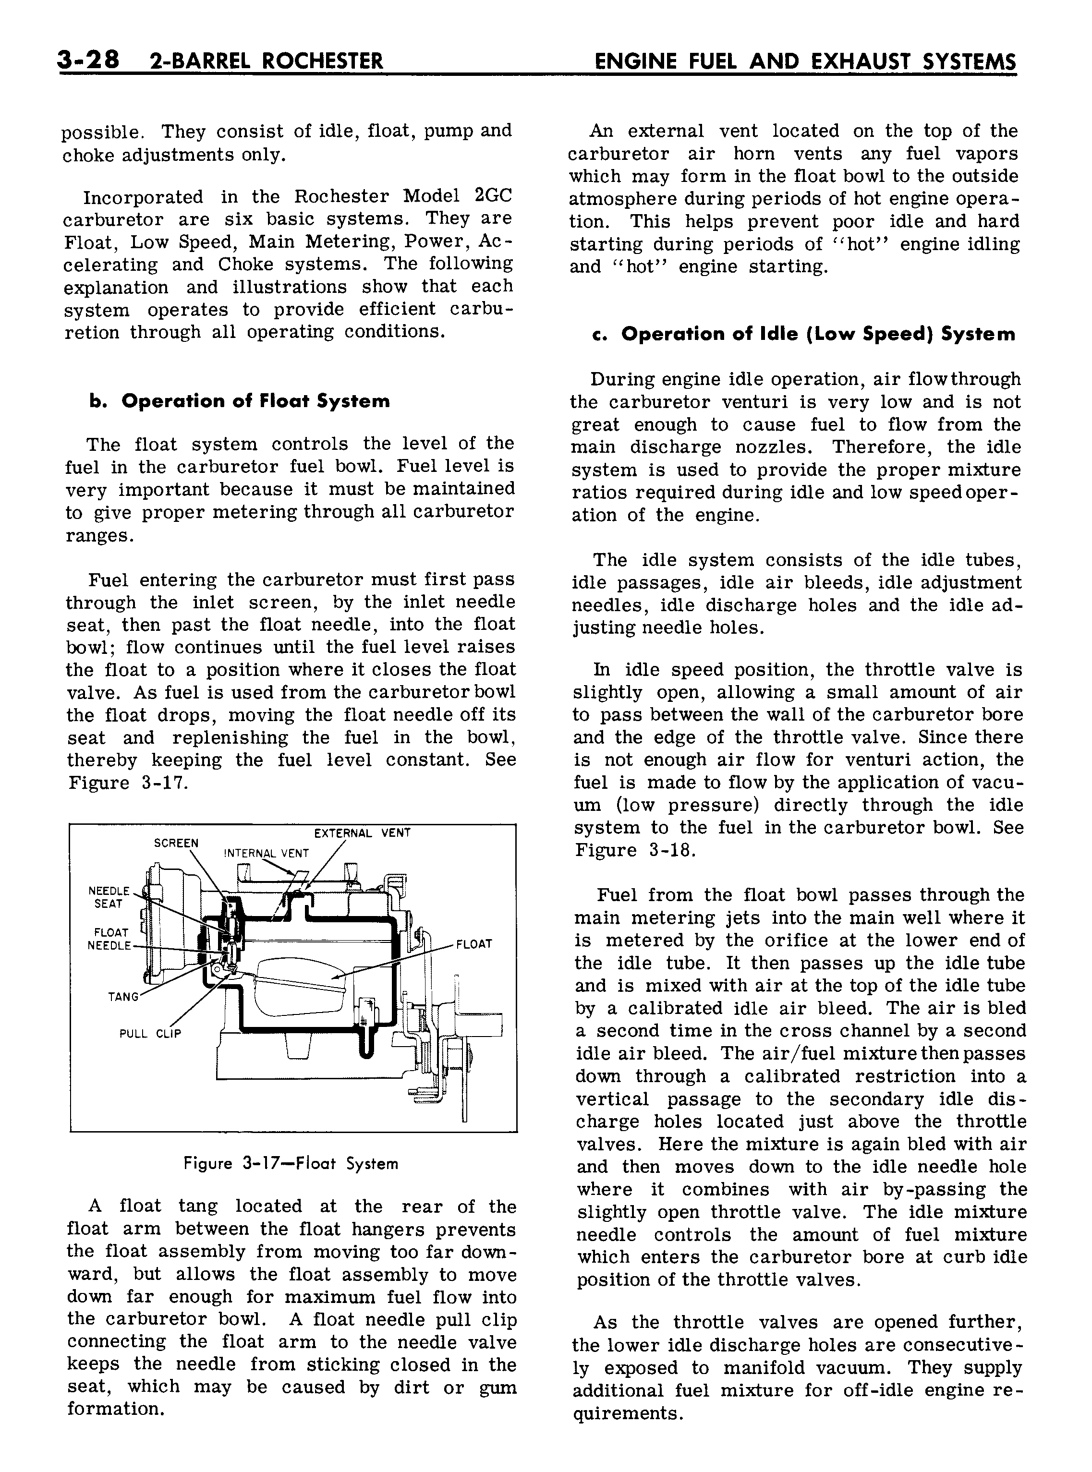 n_04 1961 Buick Shop Manual - Engine Fuel & Exhaust-028-028.jpg